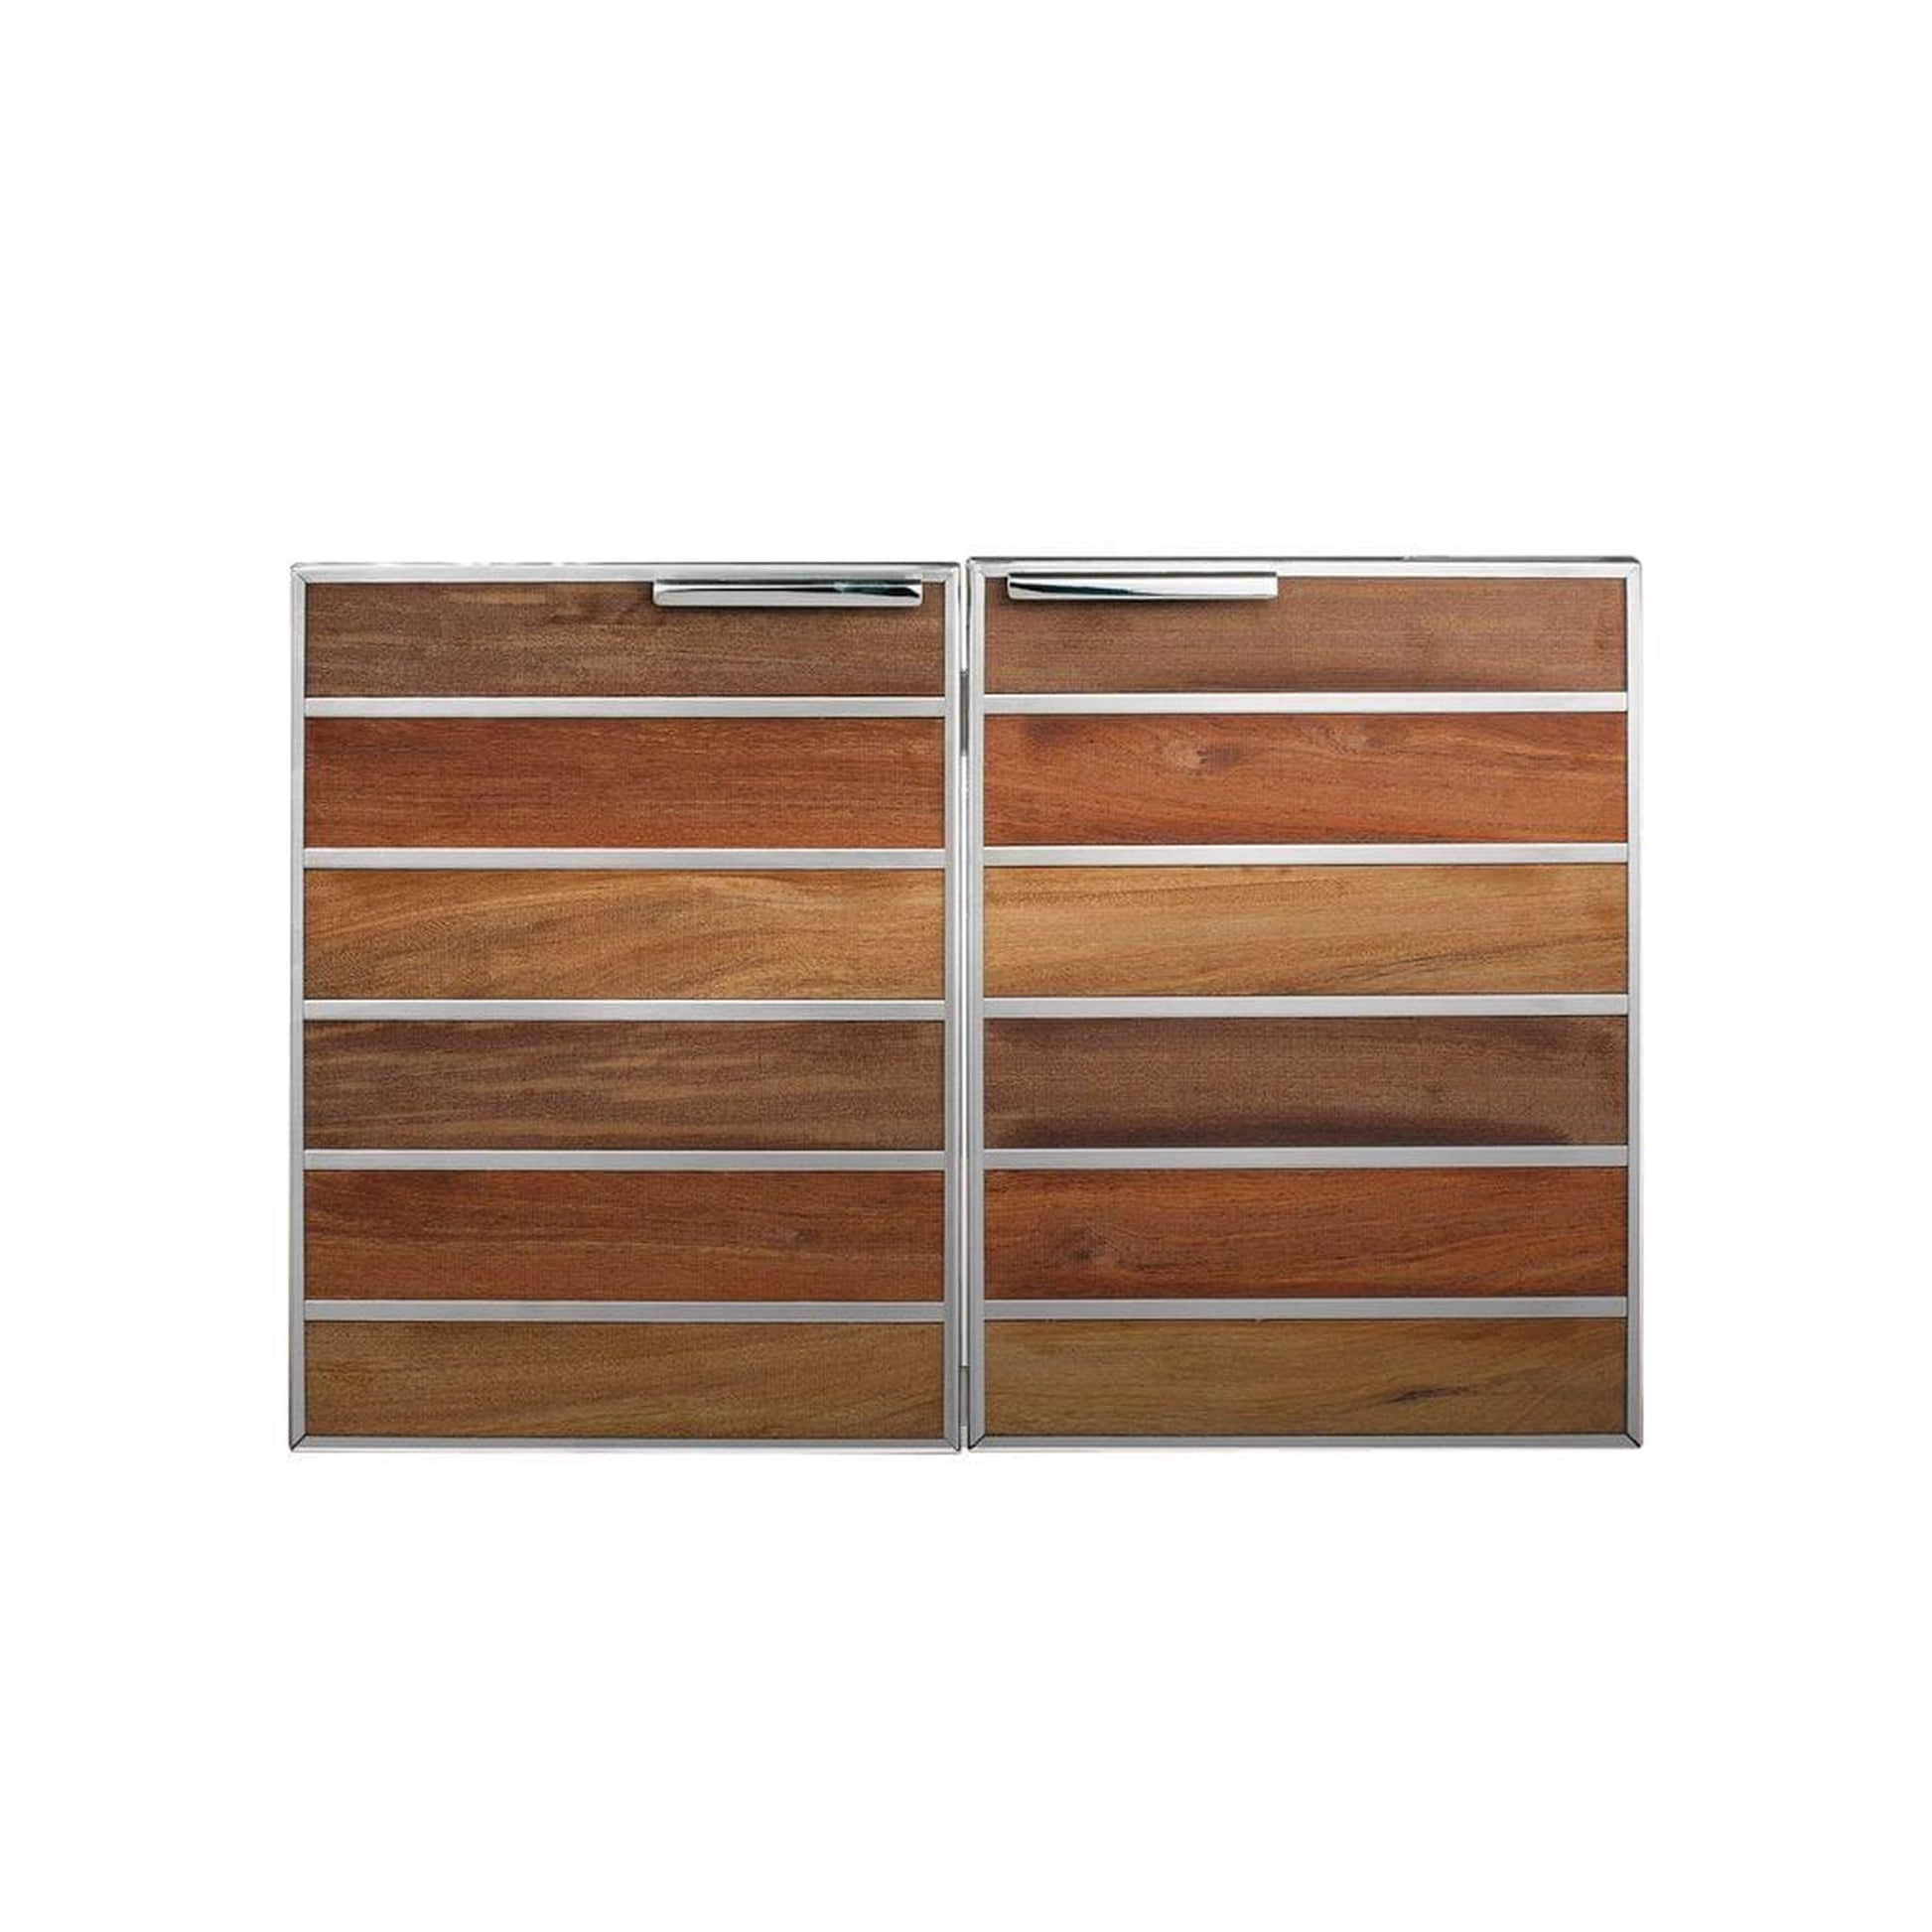 Summerset Madera 30" Stainless Steel & Wood Double Access Door